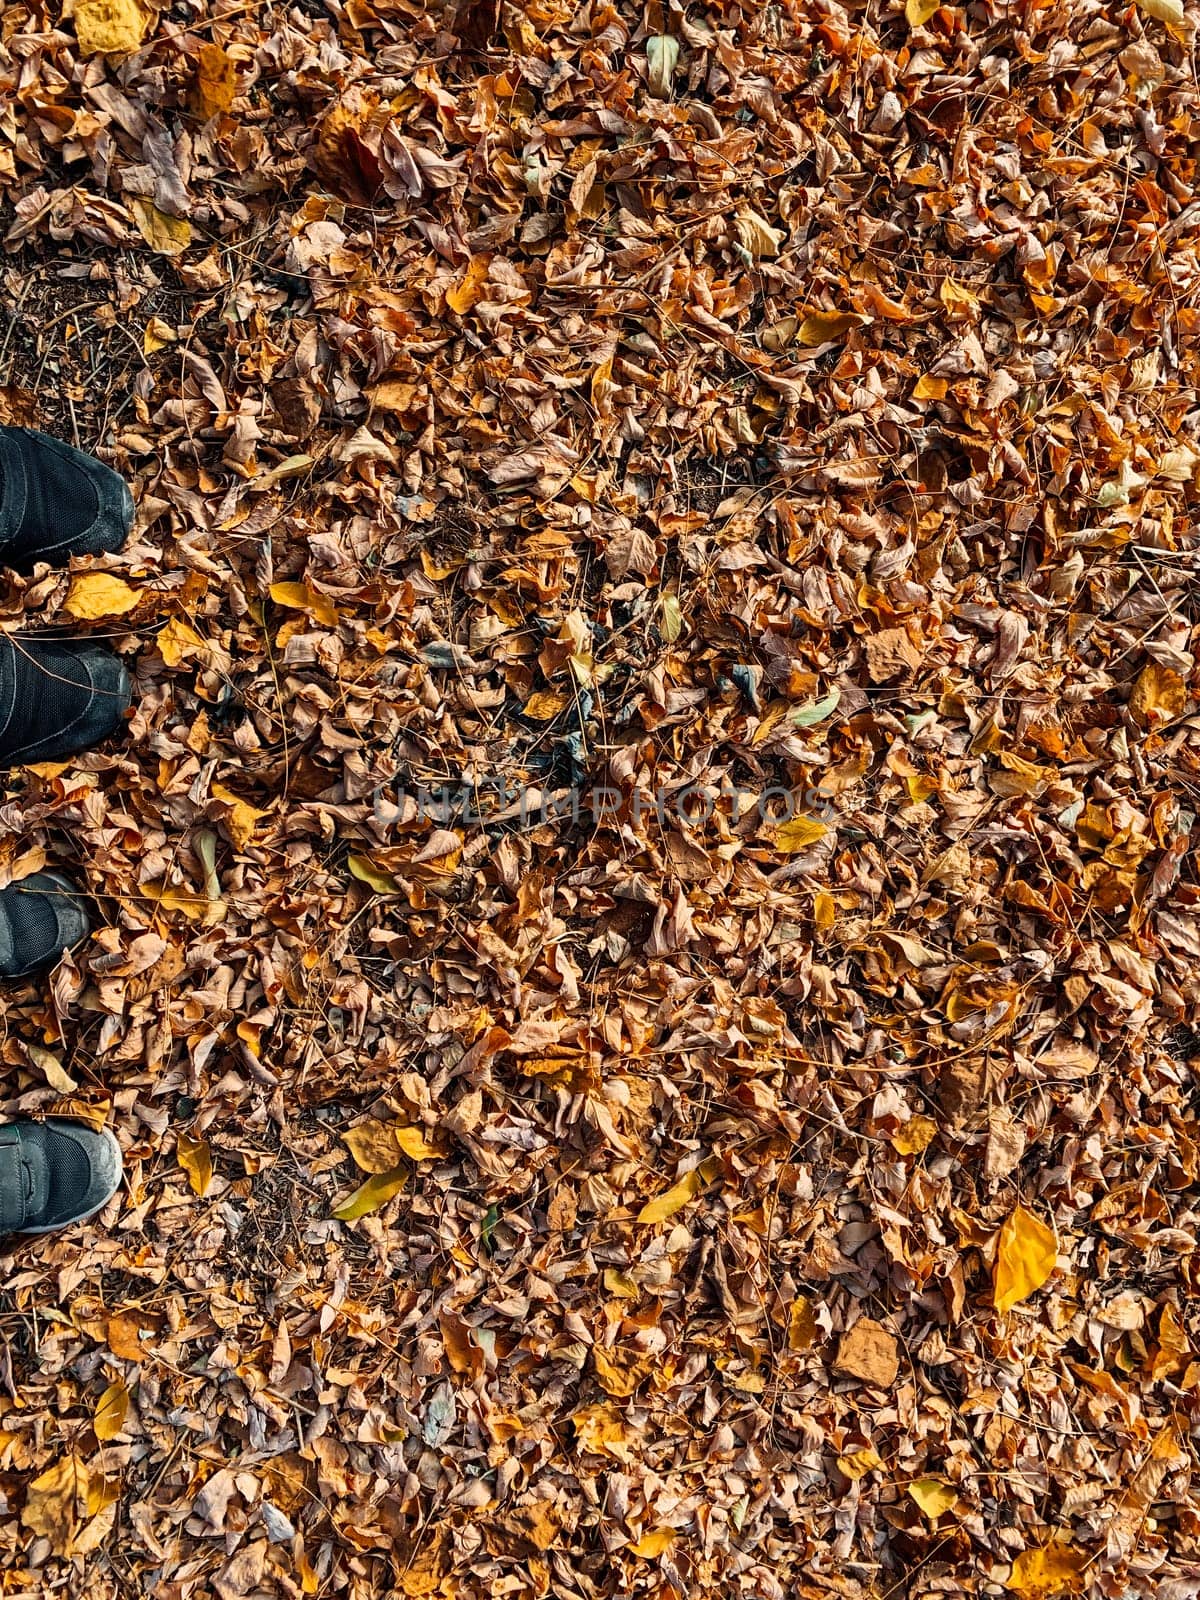 feet of two people on fallen leaves in autumn